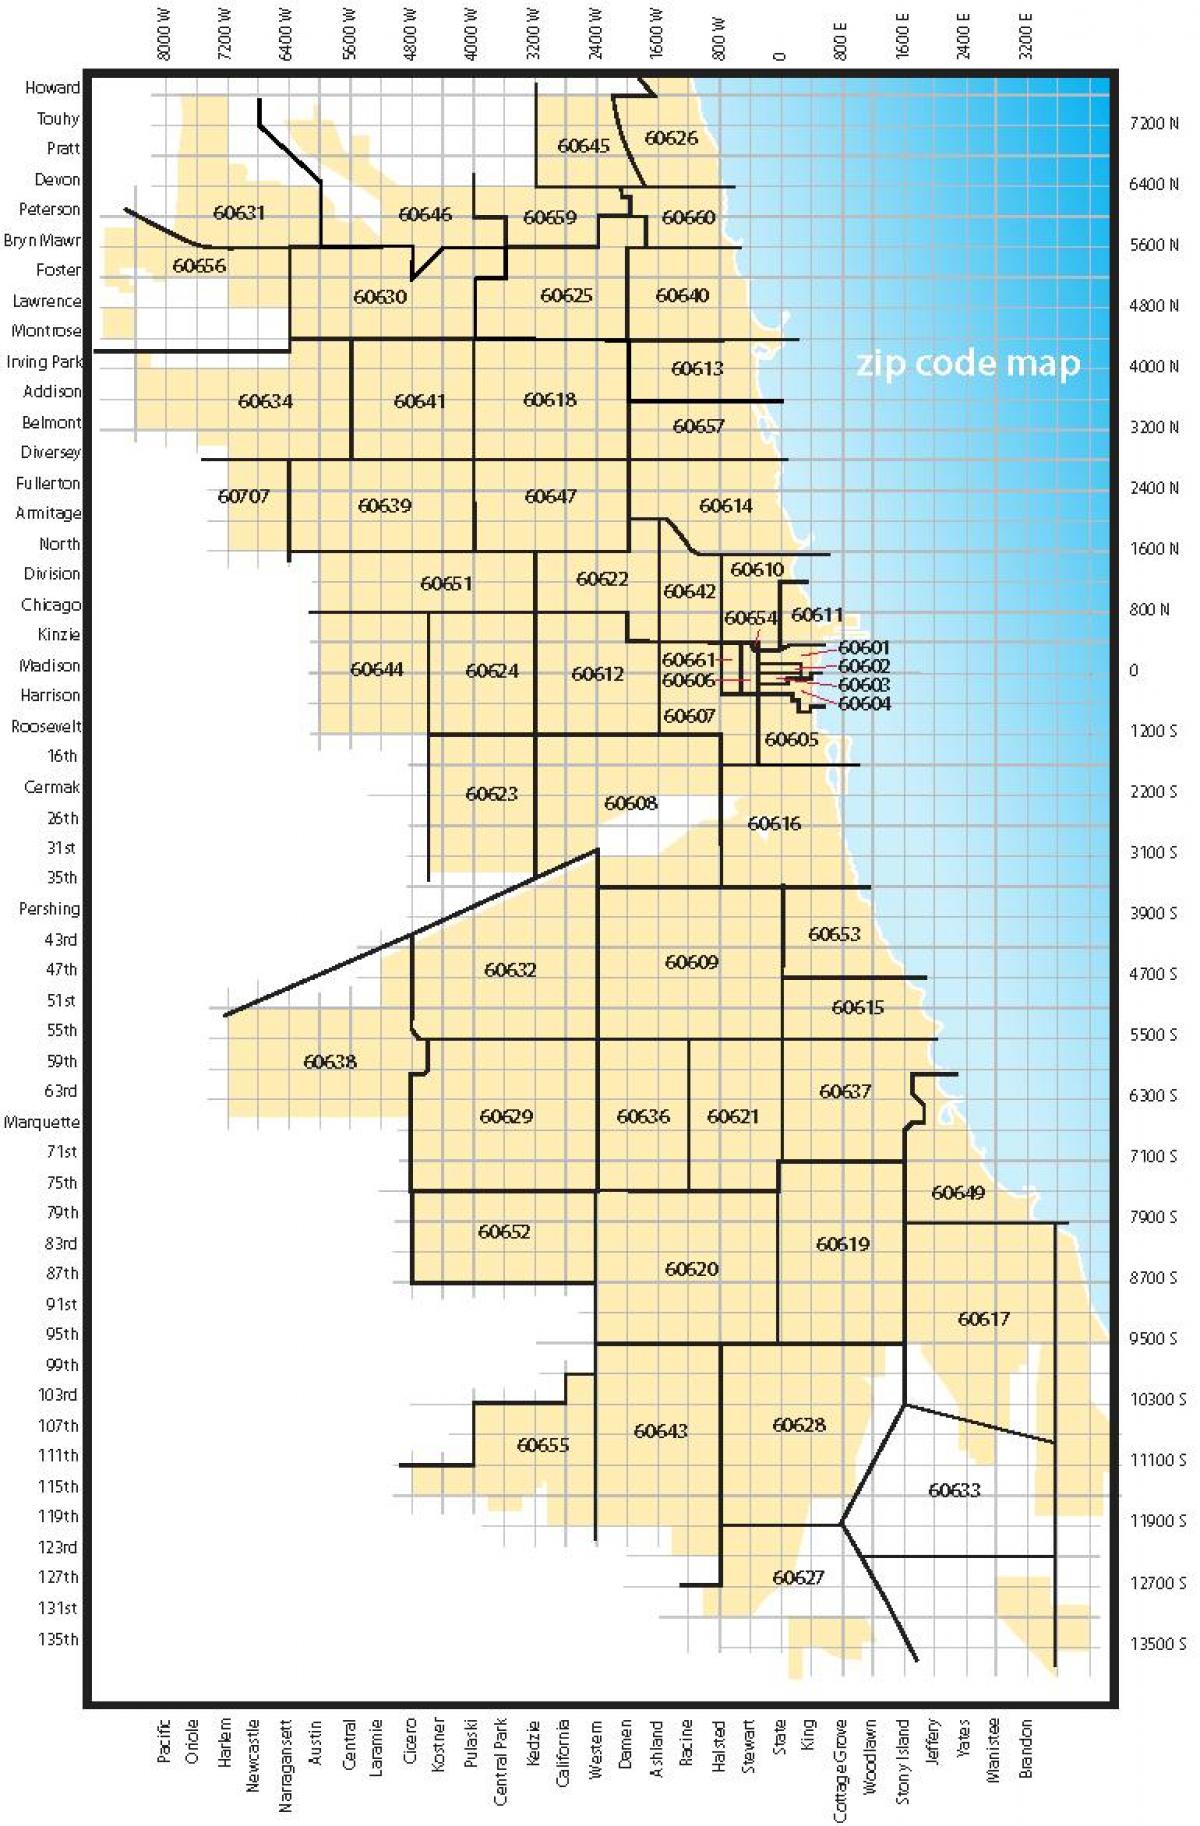 Chicago area code mapa